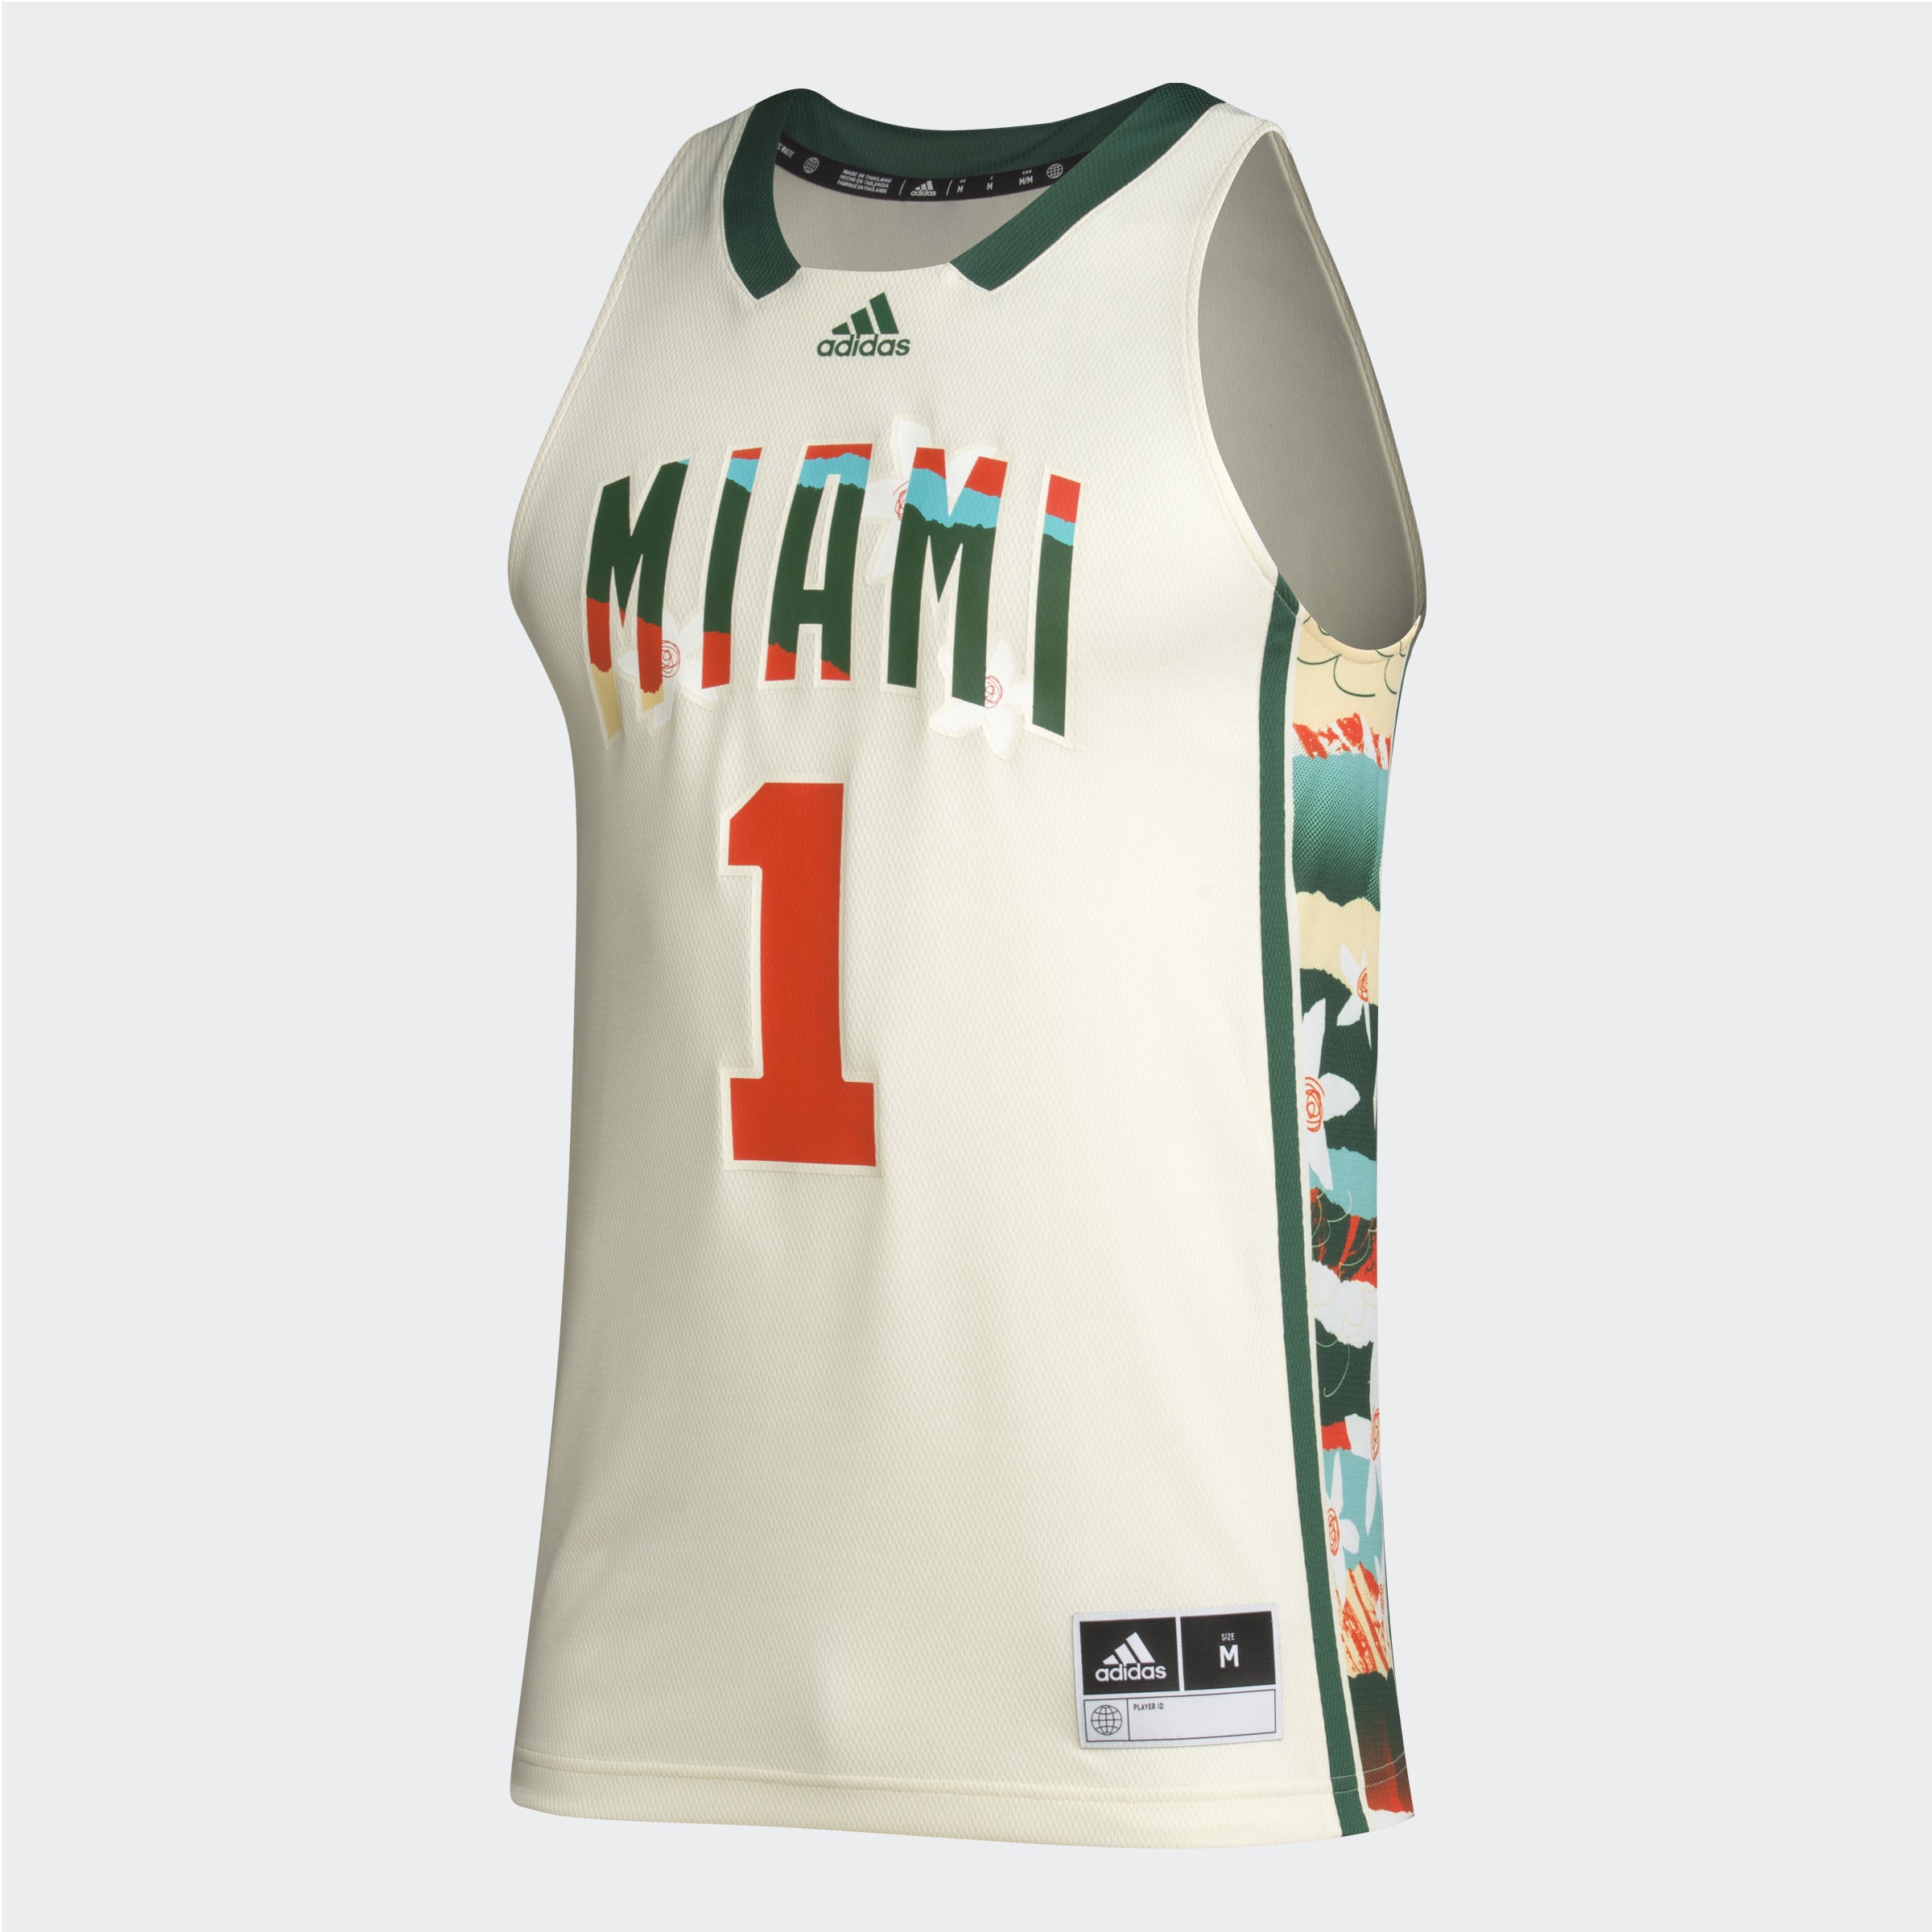 Miami Hurricanes adidas Honoring Black Excellence Replica Basketball Jersey  - White